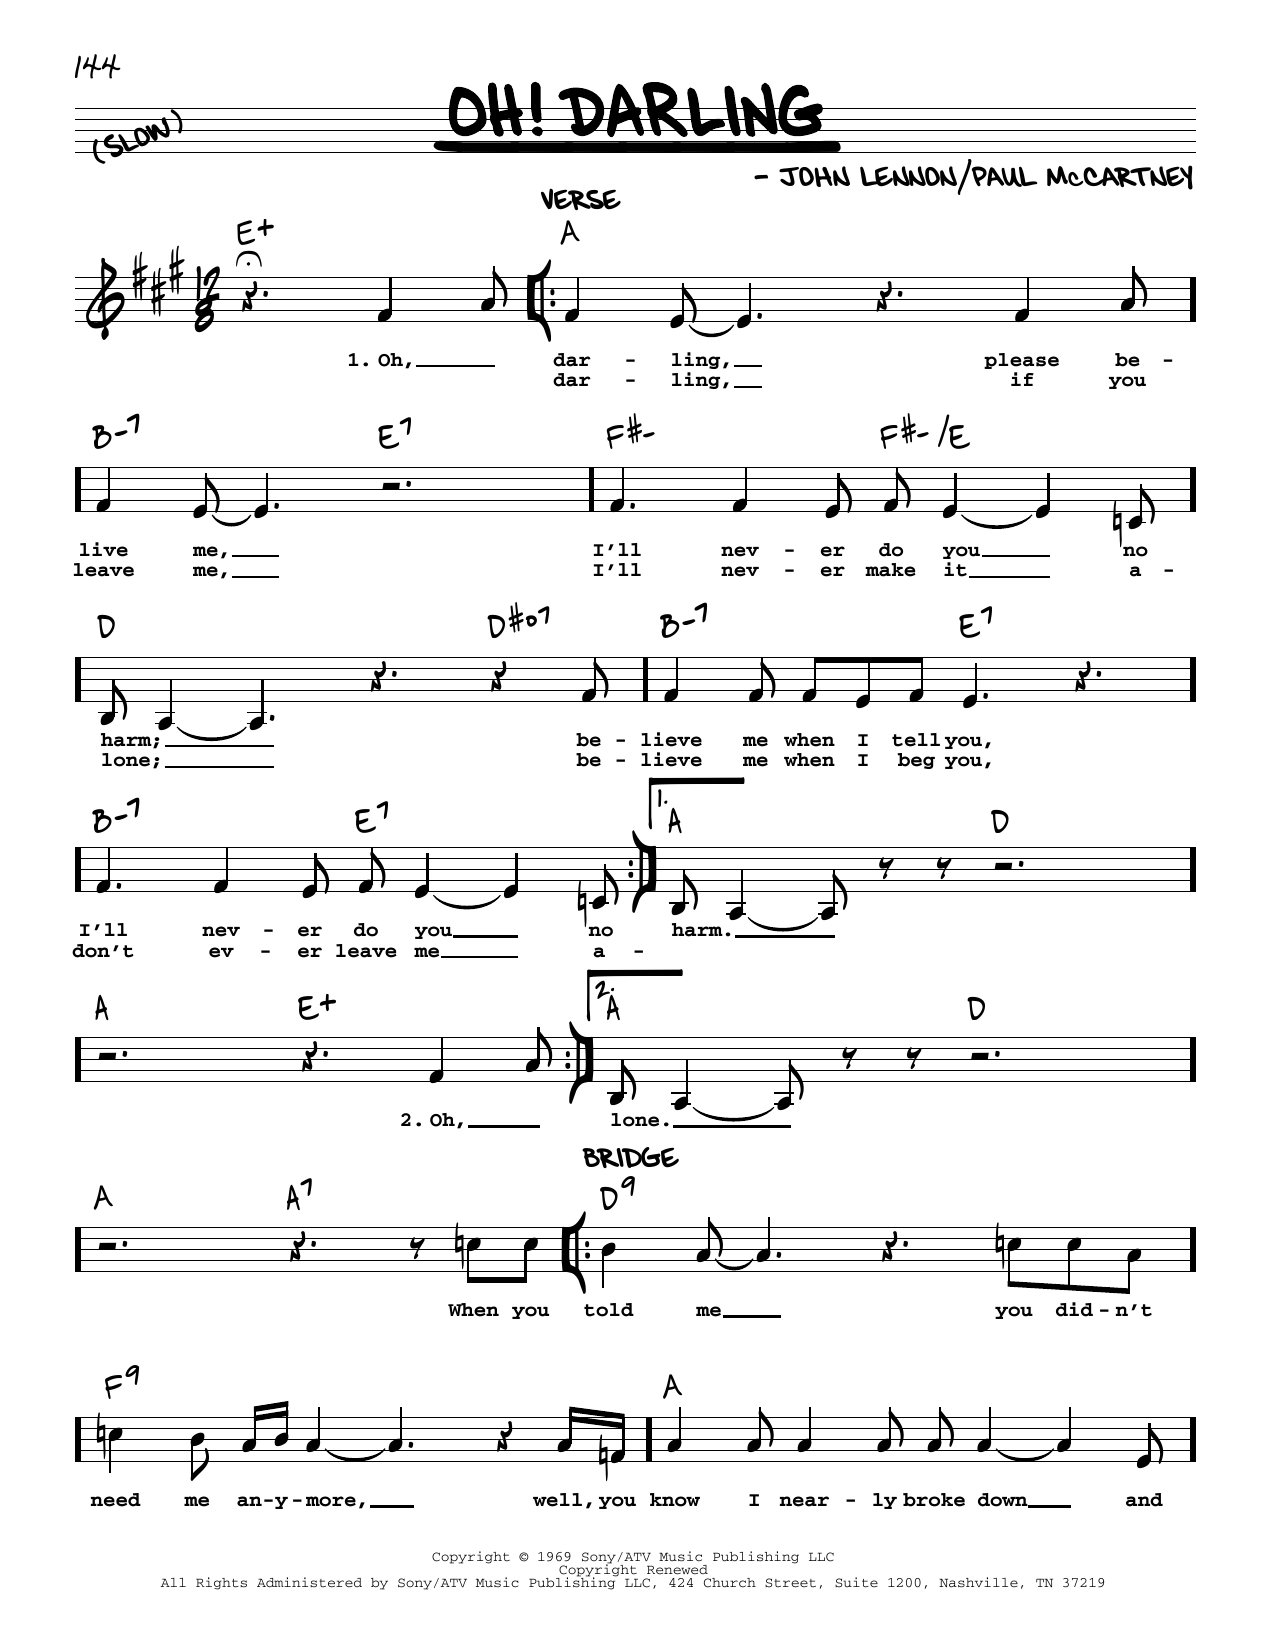 The Beatles Oh! Darling [Jazz version] Sheet Music Notes & Chords for Real Book – Melody, Lyrics & Chords - Download or Print PDF